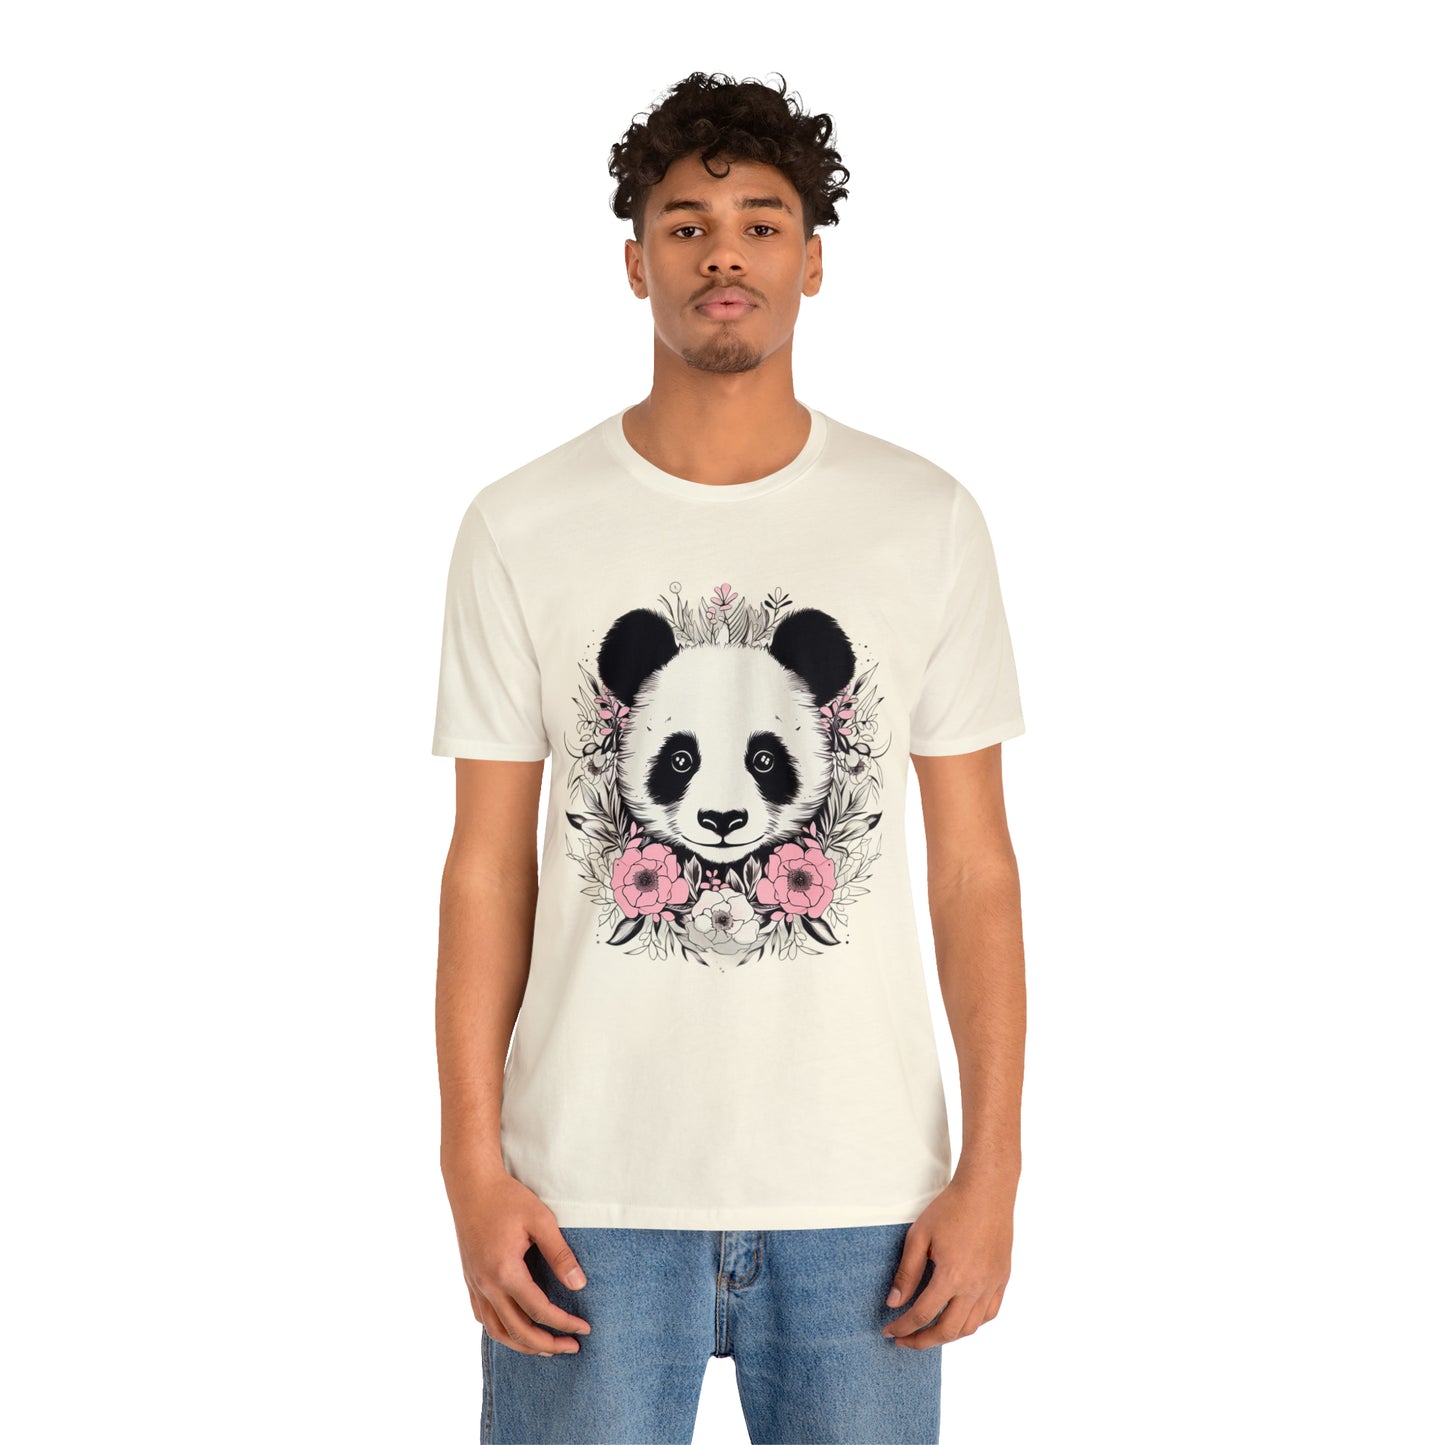 Panda Bear Tee with Floral Print